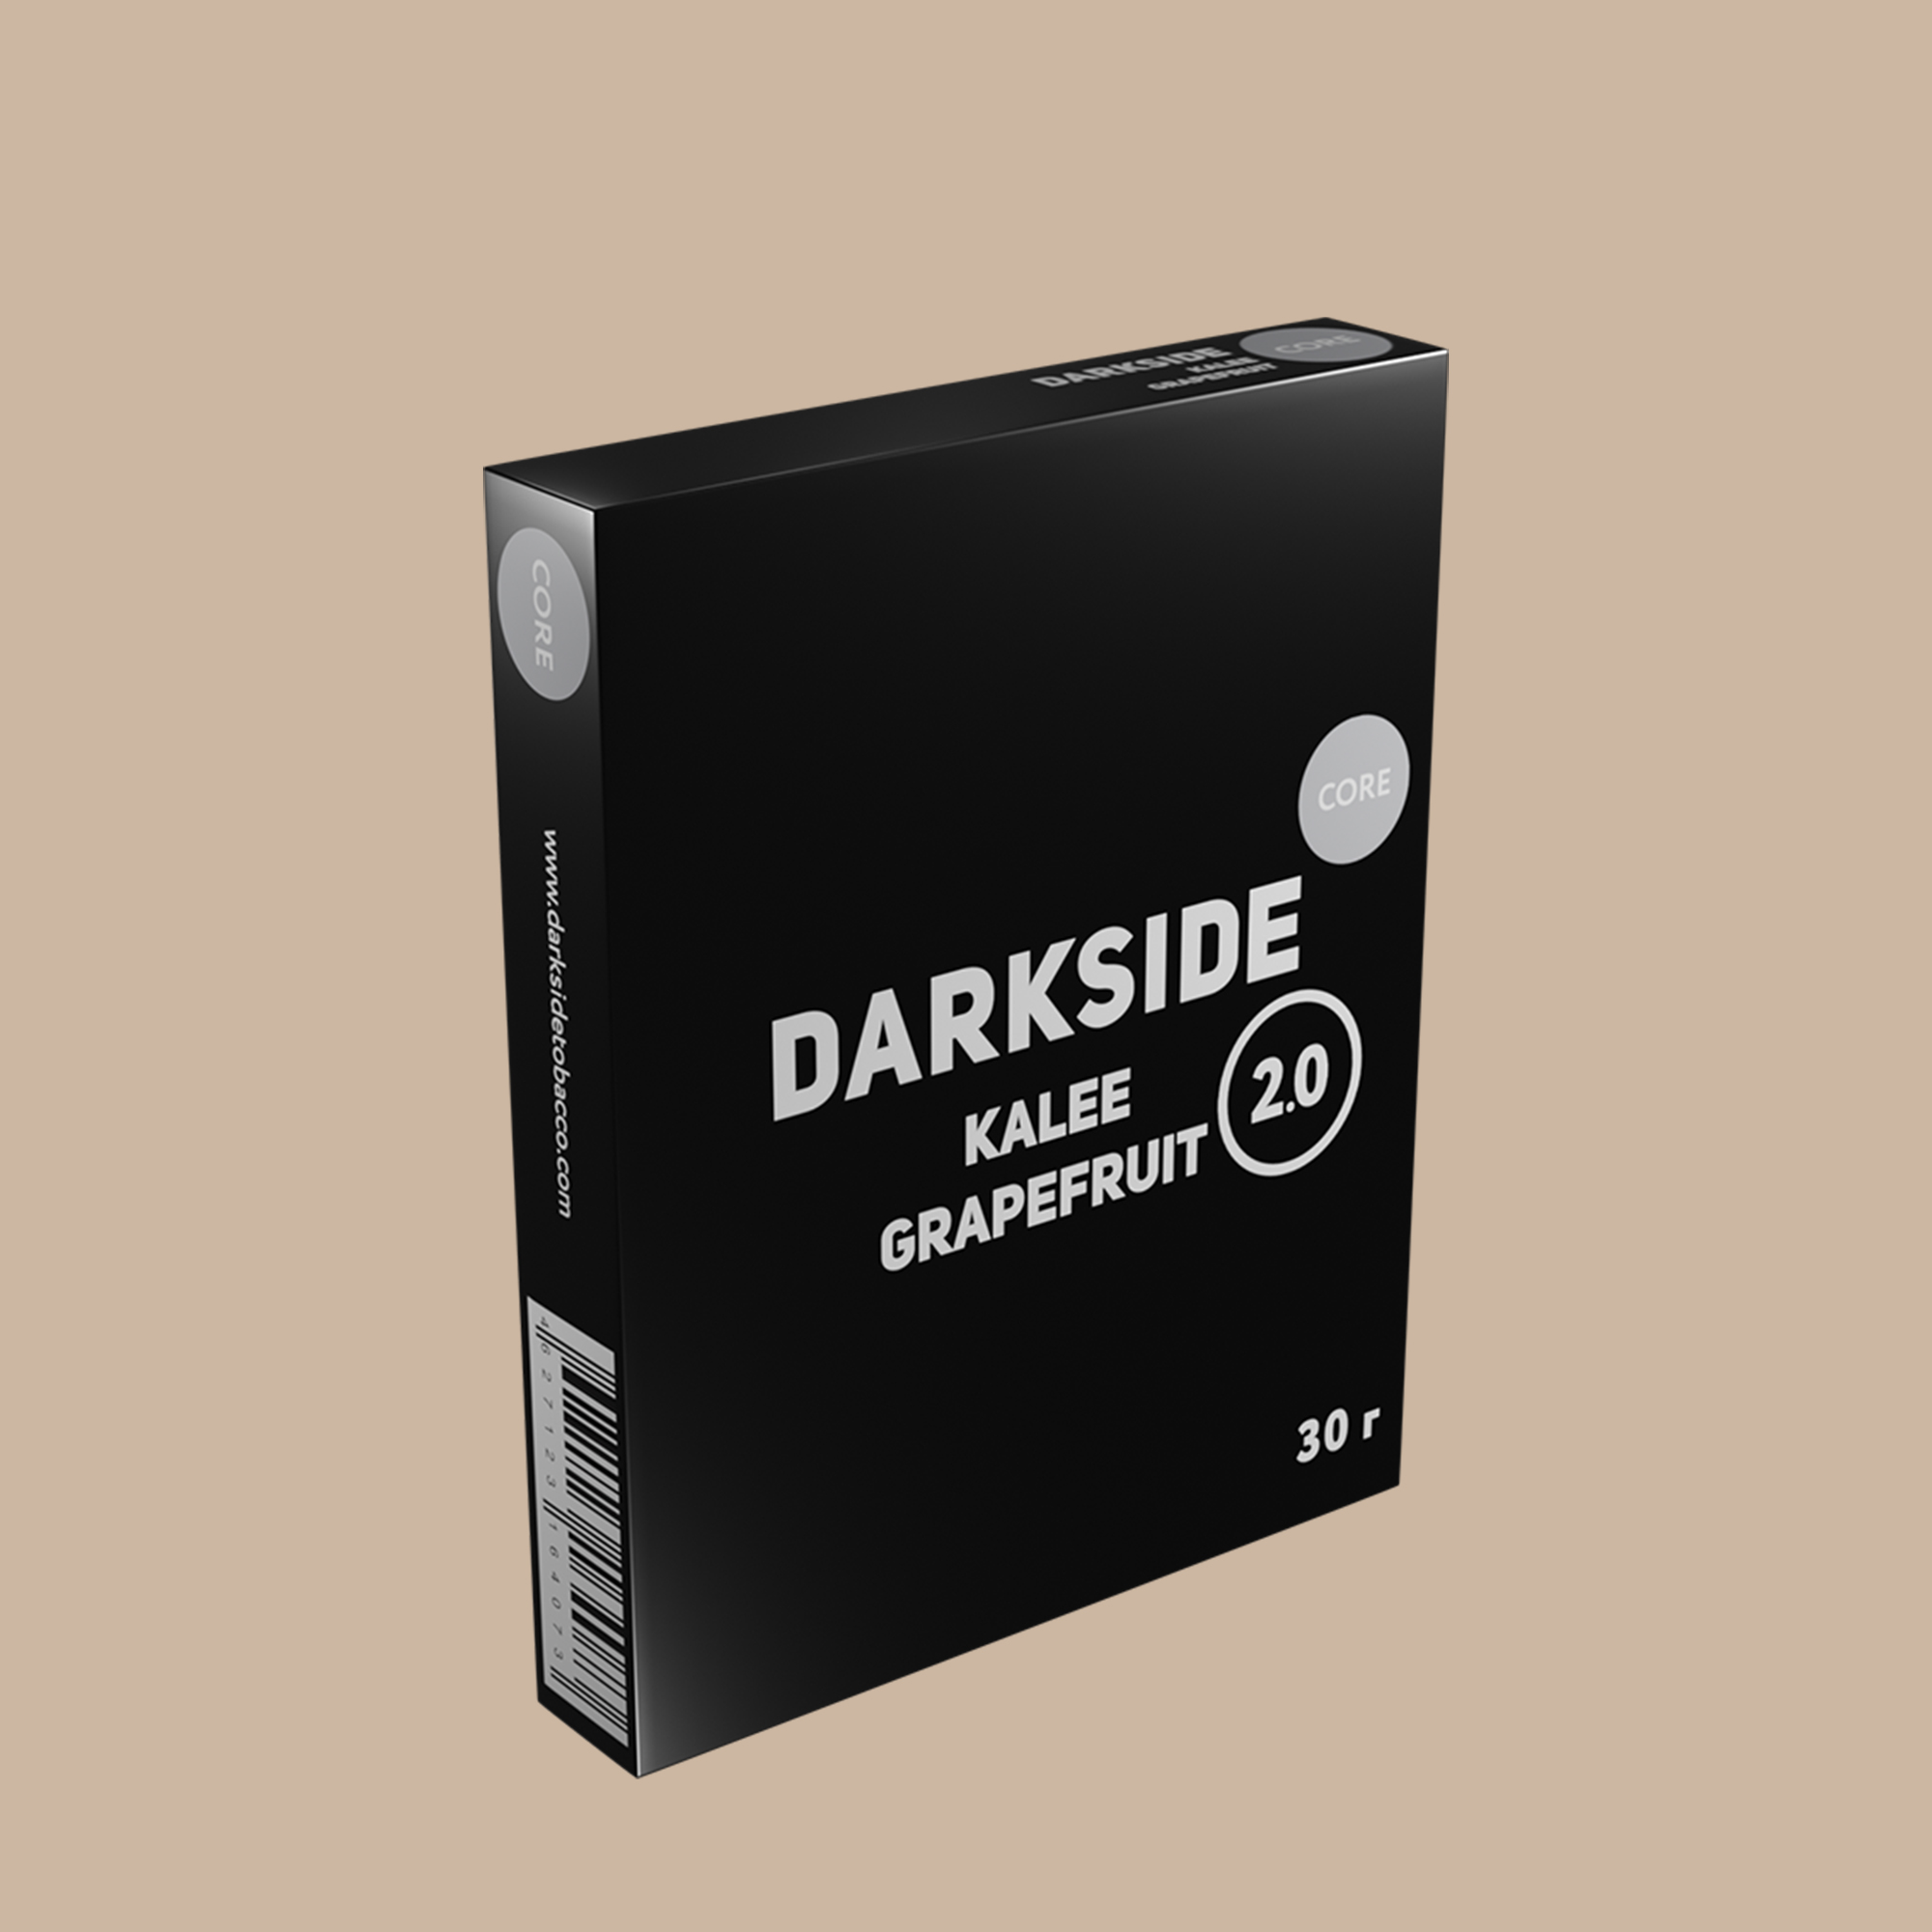 Табак для кальяна Dark side “Дарк Сайд” Kalee Grapefruit 2.0 (Кали грейпфрут 2.0), 30 гр.